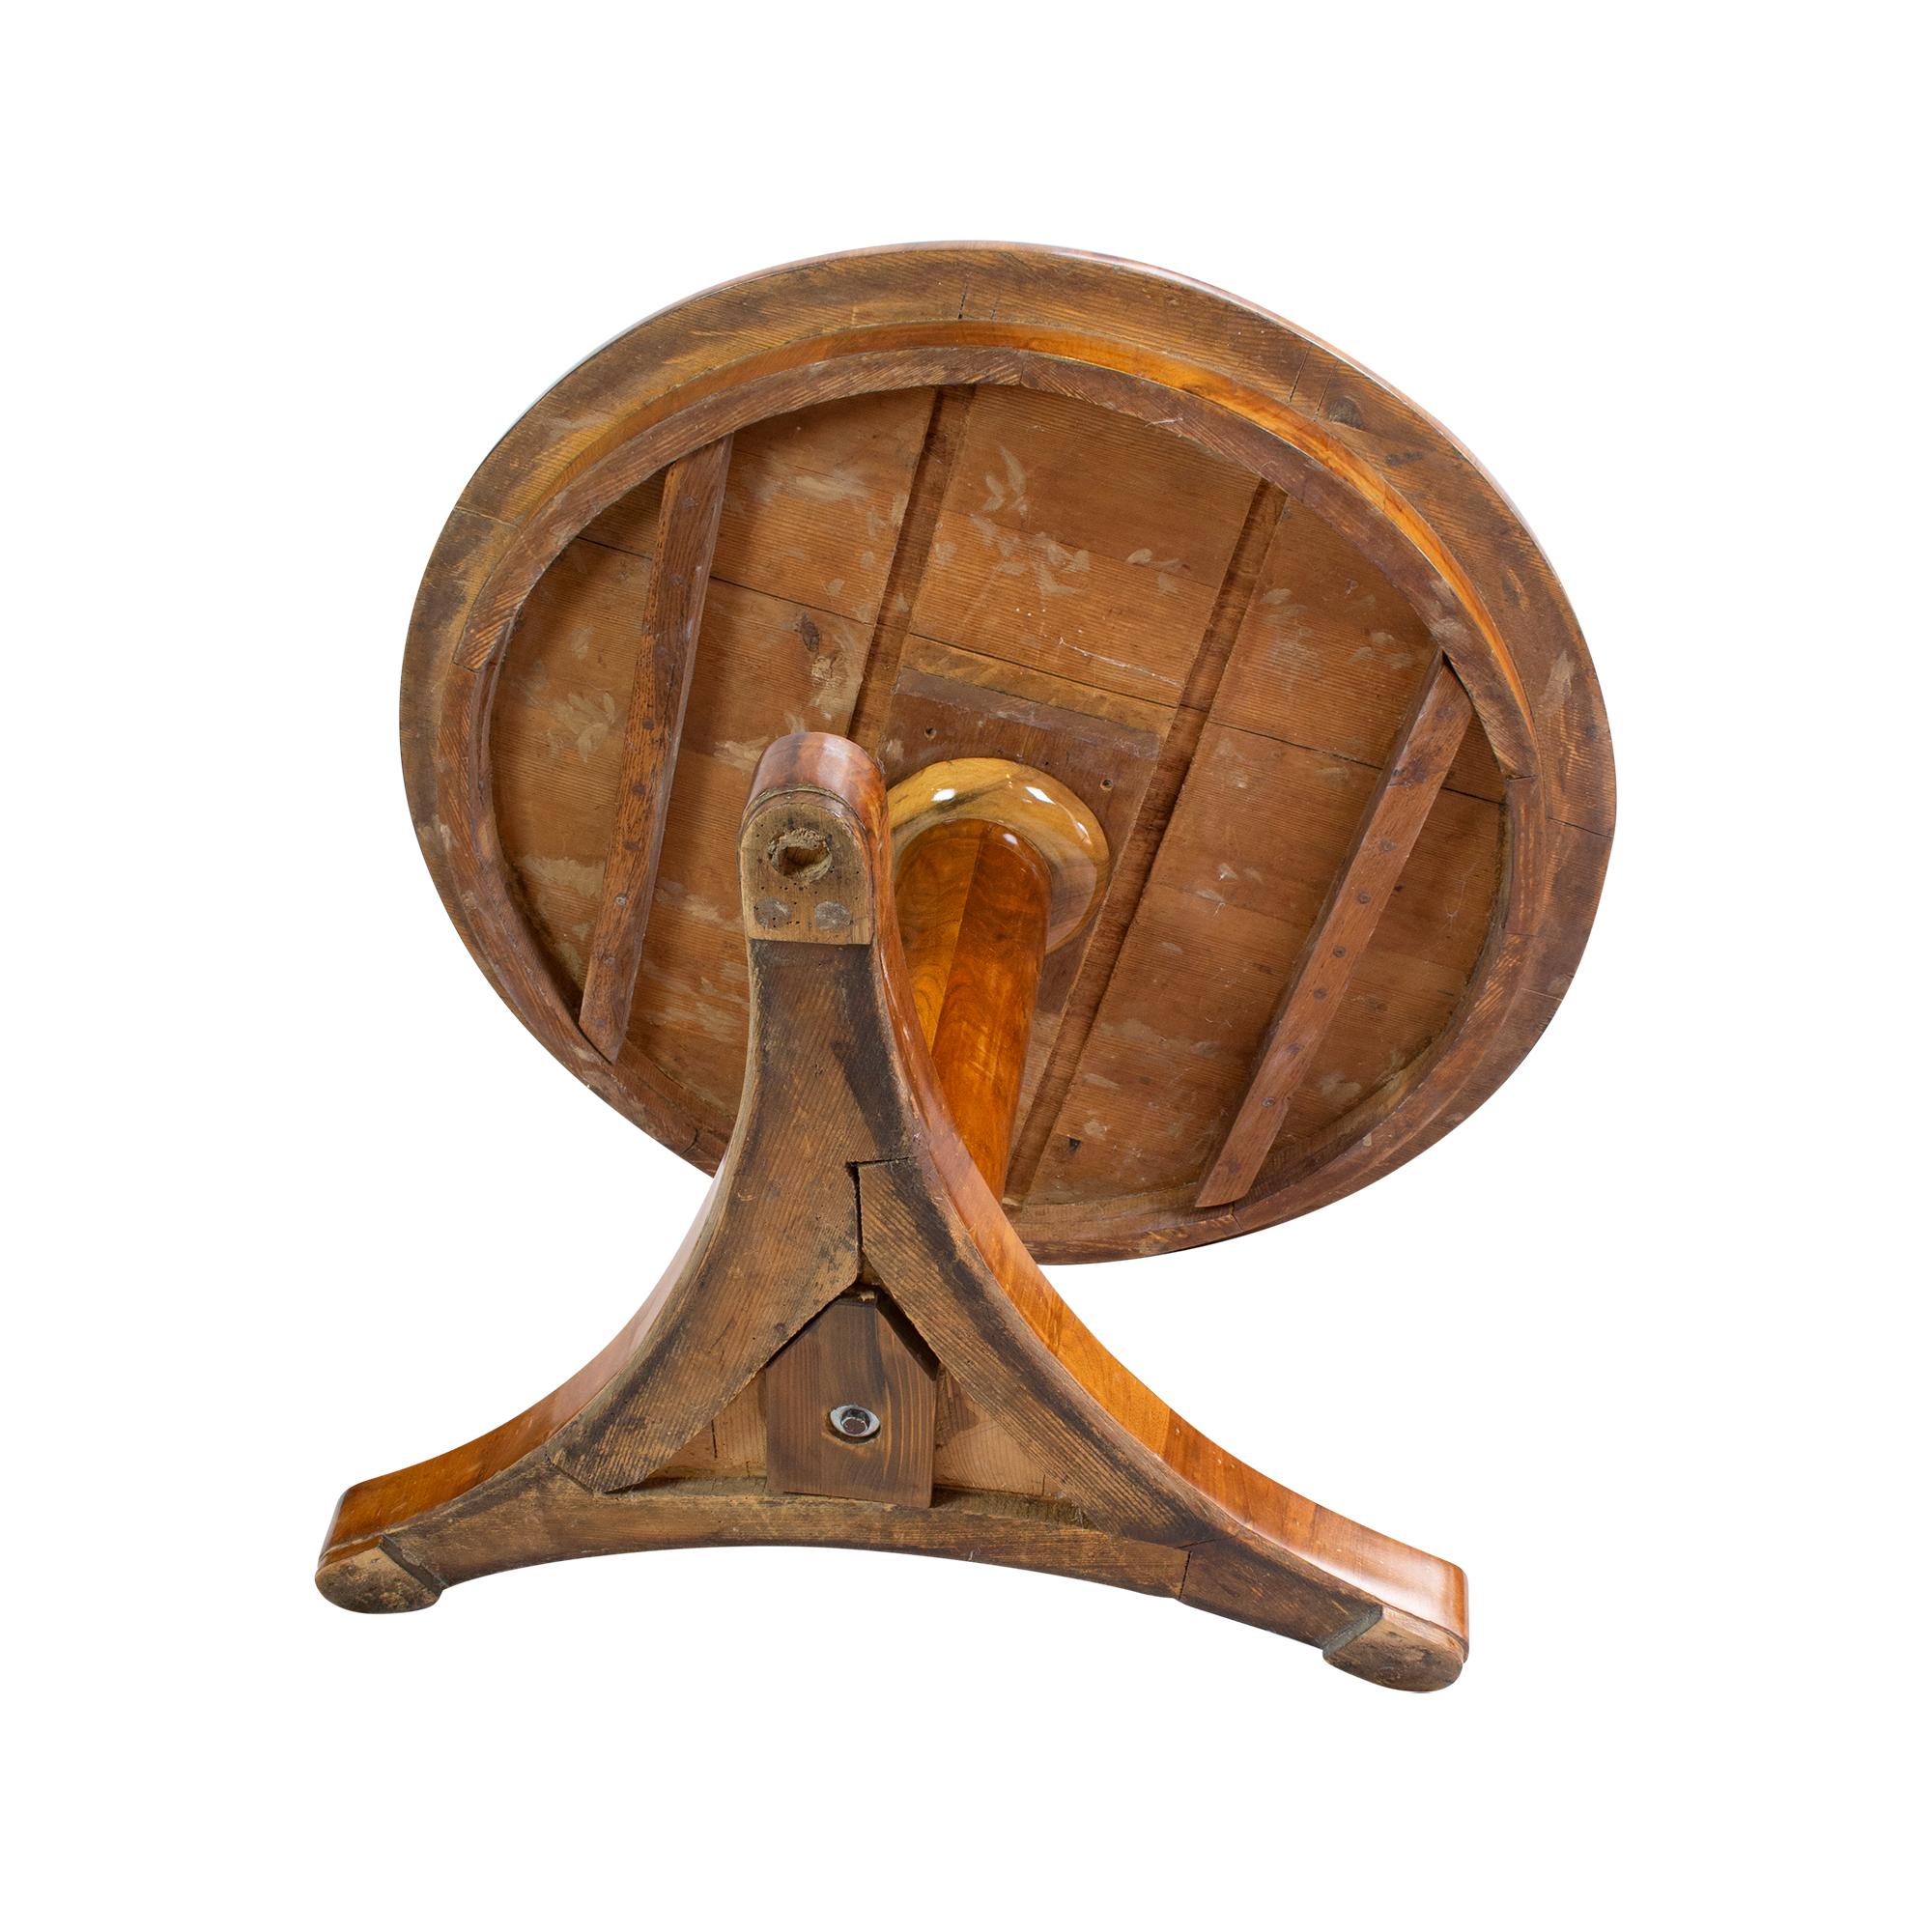 Polished 19th Century Biedermeier Round Salon Walnut Table For Sale